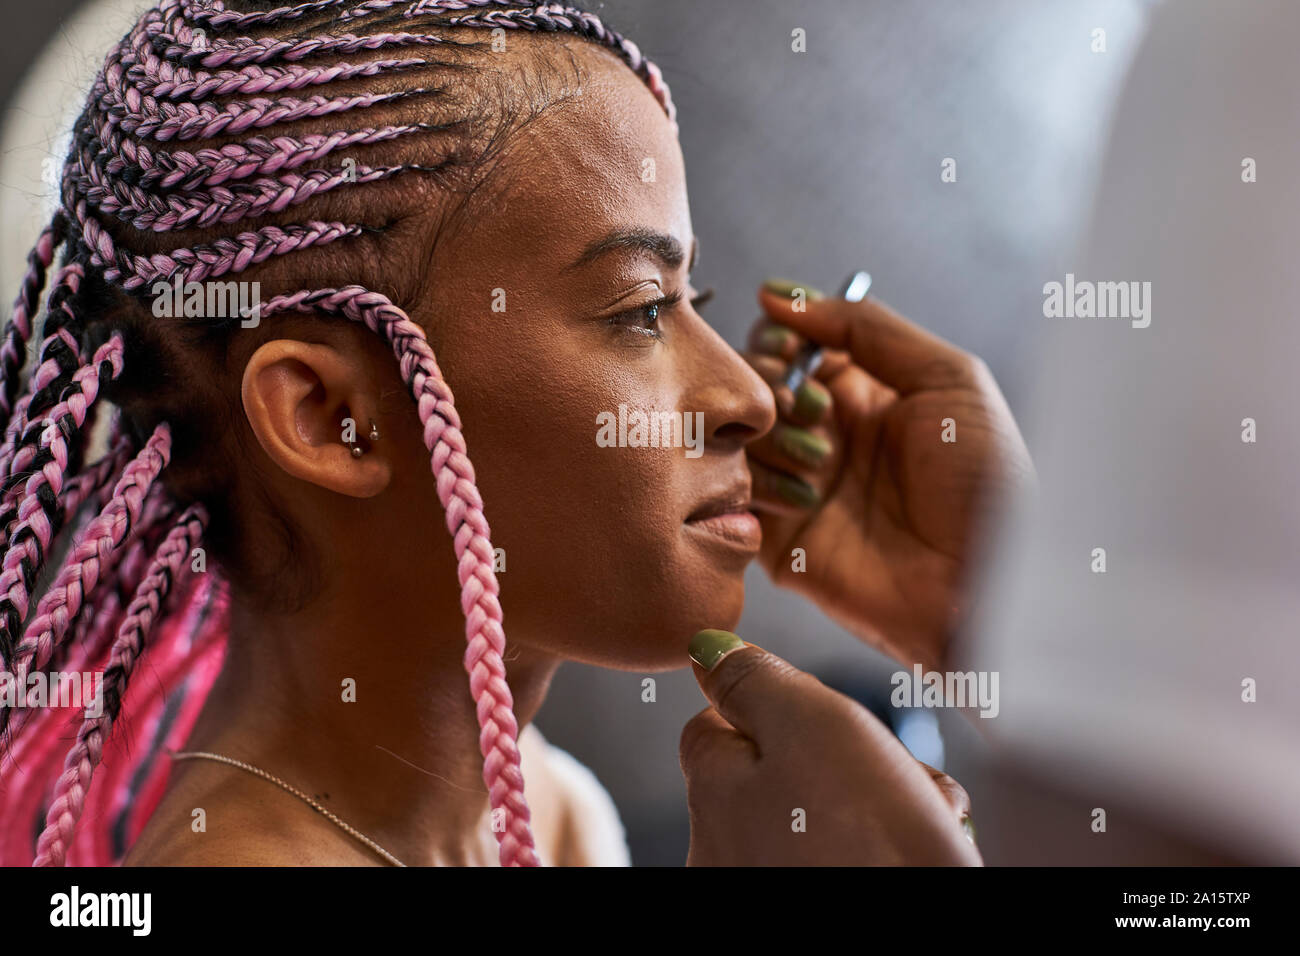 Visagiste applying makeup on young woman's face Stock Photo